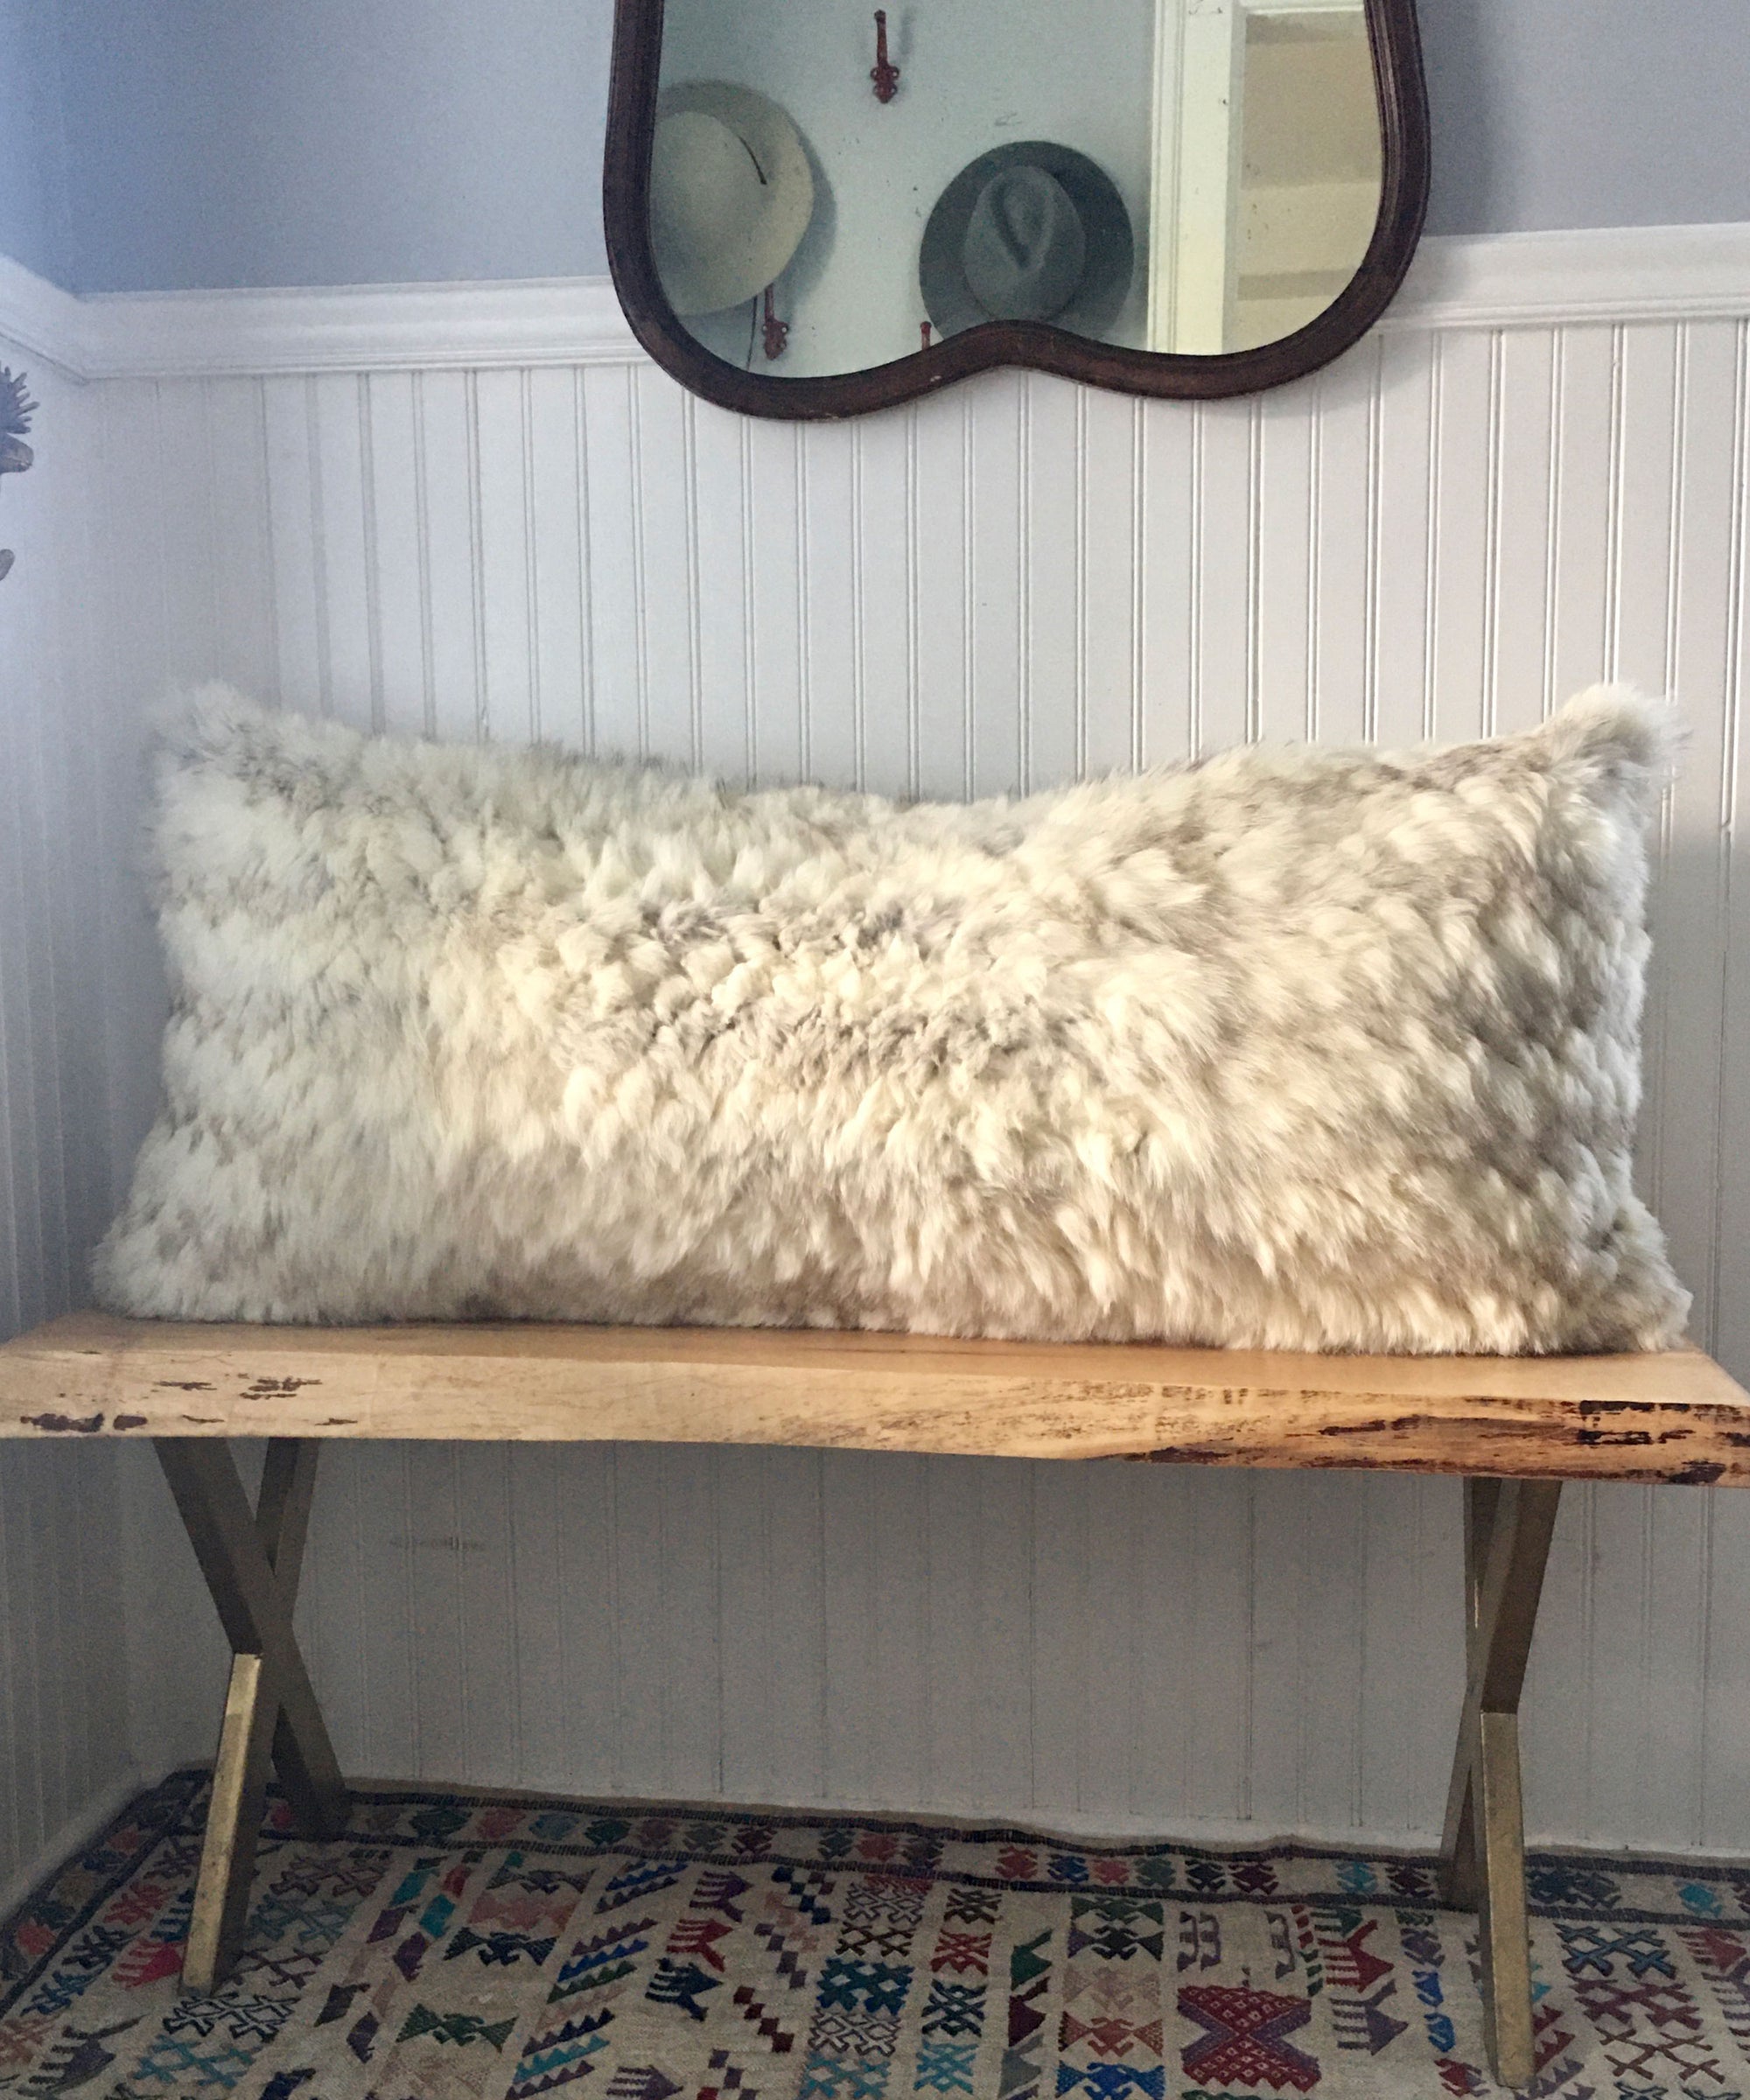 Reclaimed White Fox Fur Body Pillow 20" x 48"